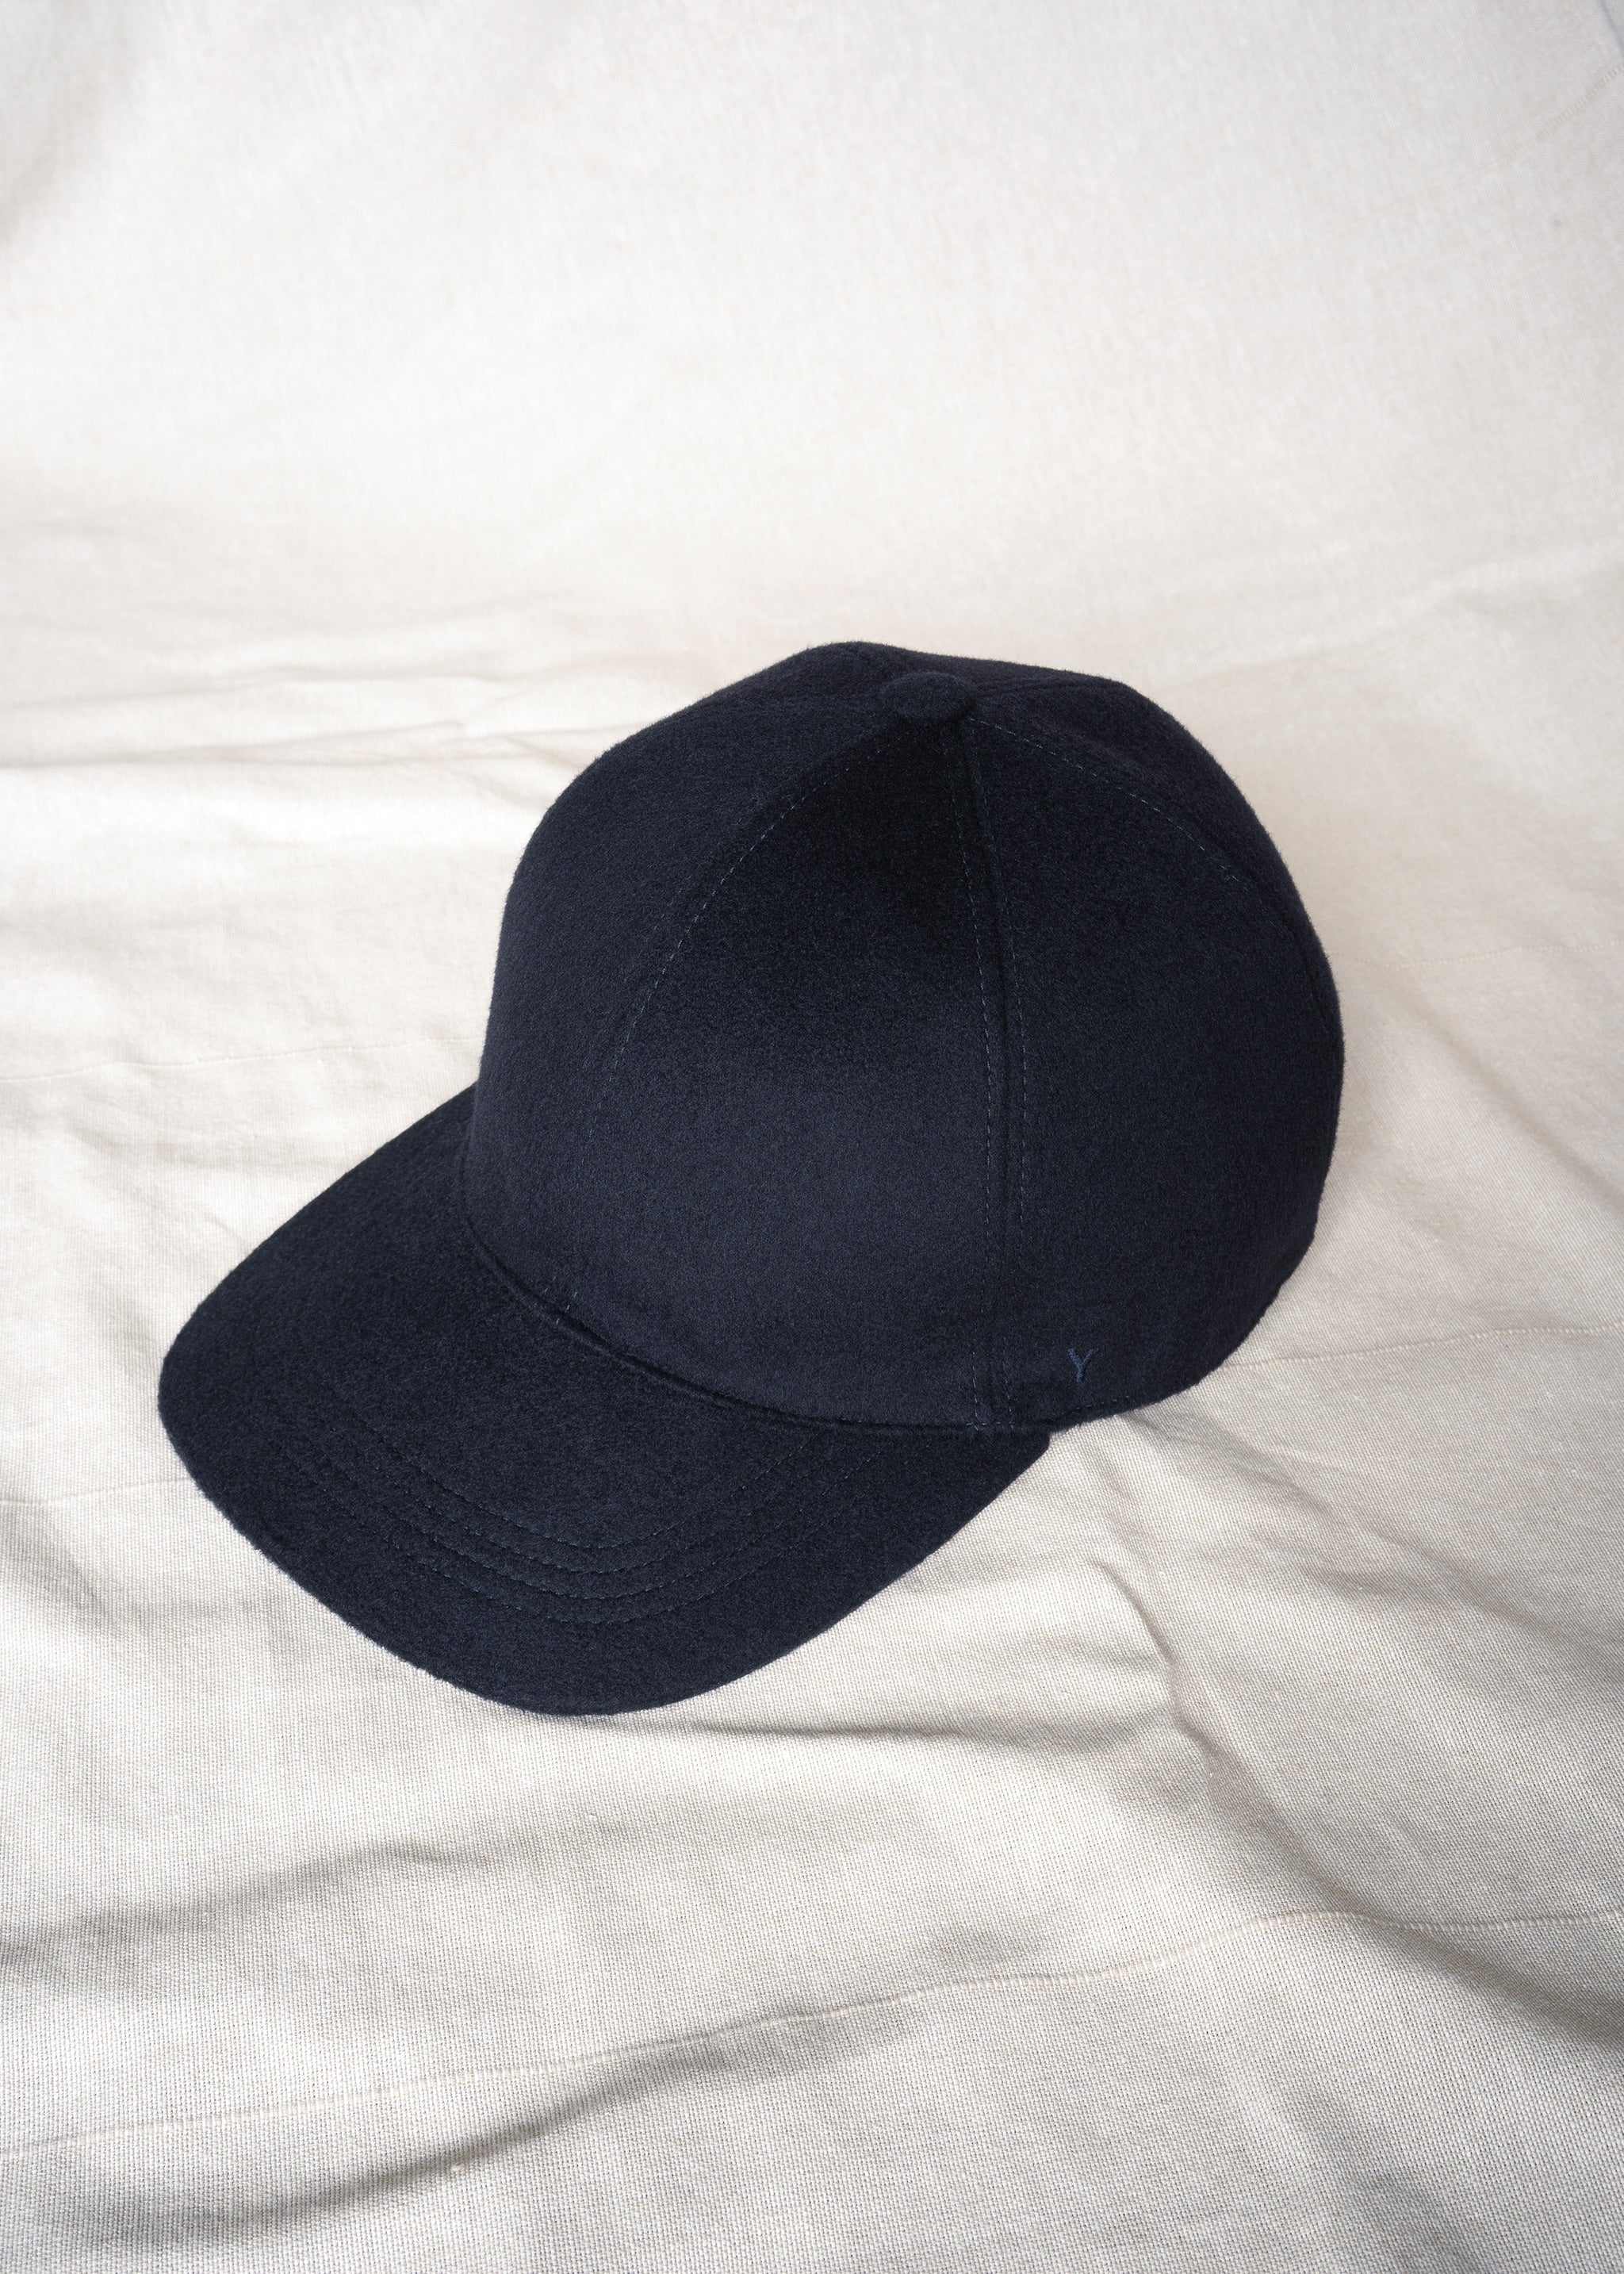 Y-0001 Baseball Cap - Navy (Cashmere blend)